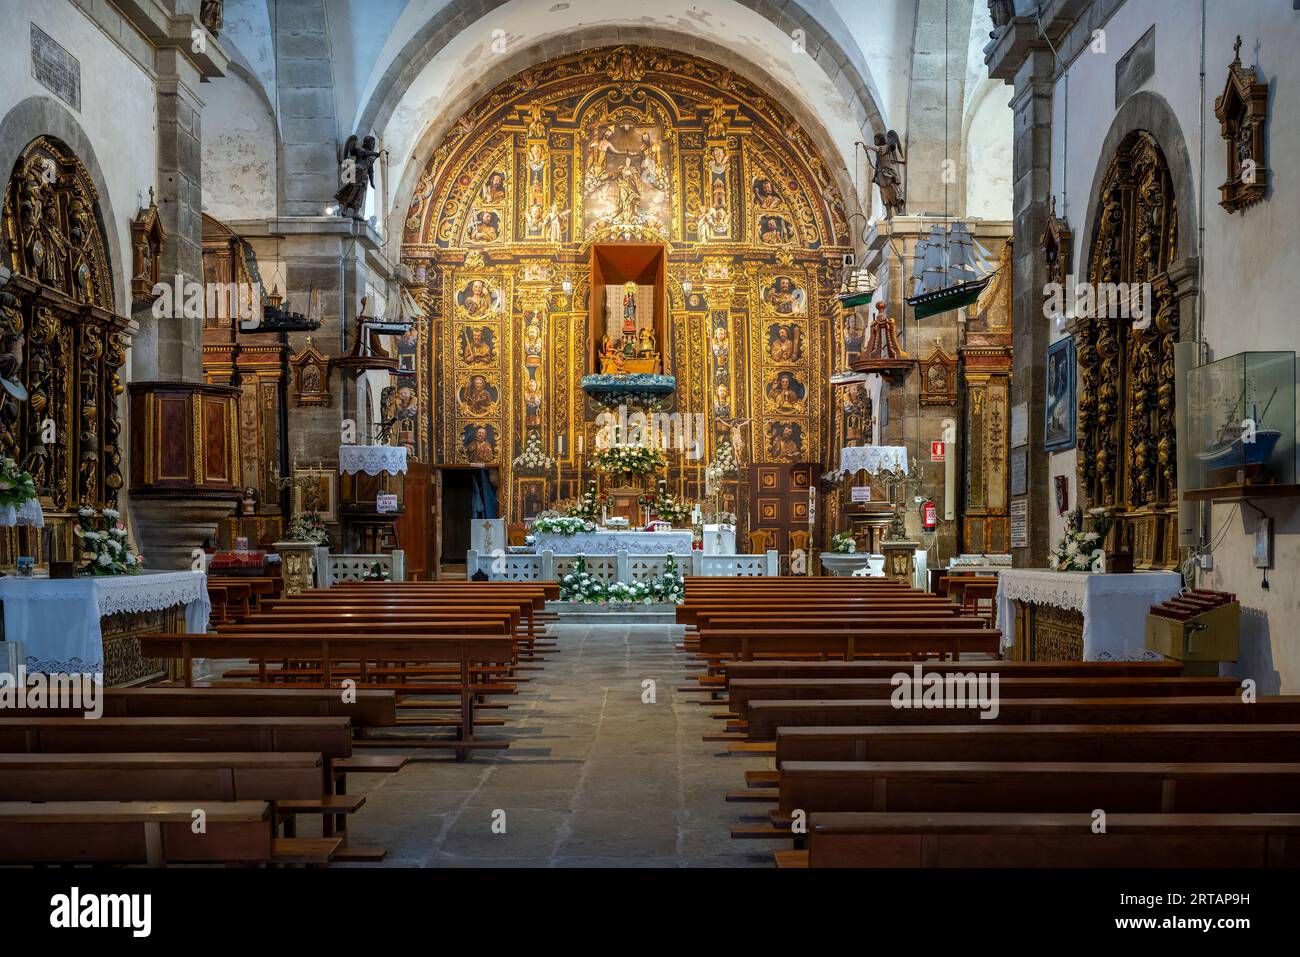 Virxe da barca Sanctuary, Muxia, Galizia, Spagna Foto Stock